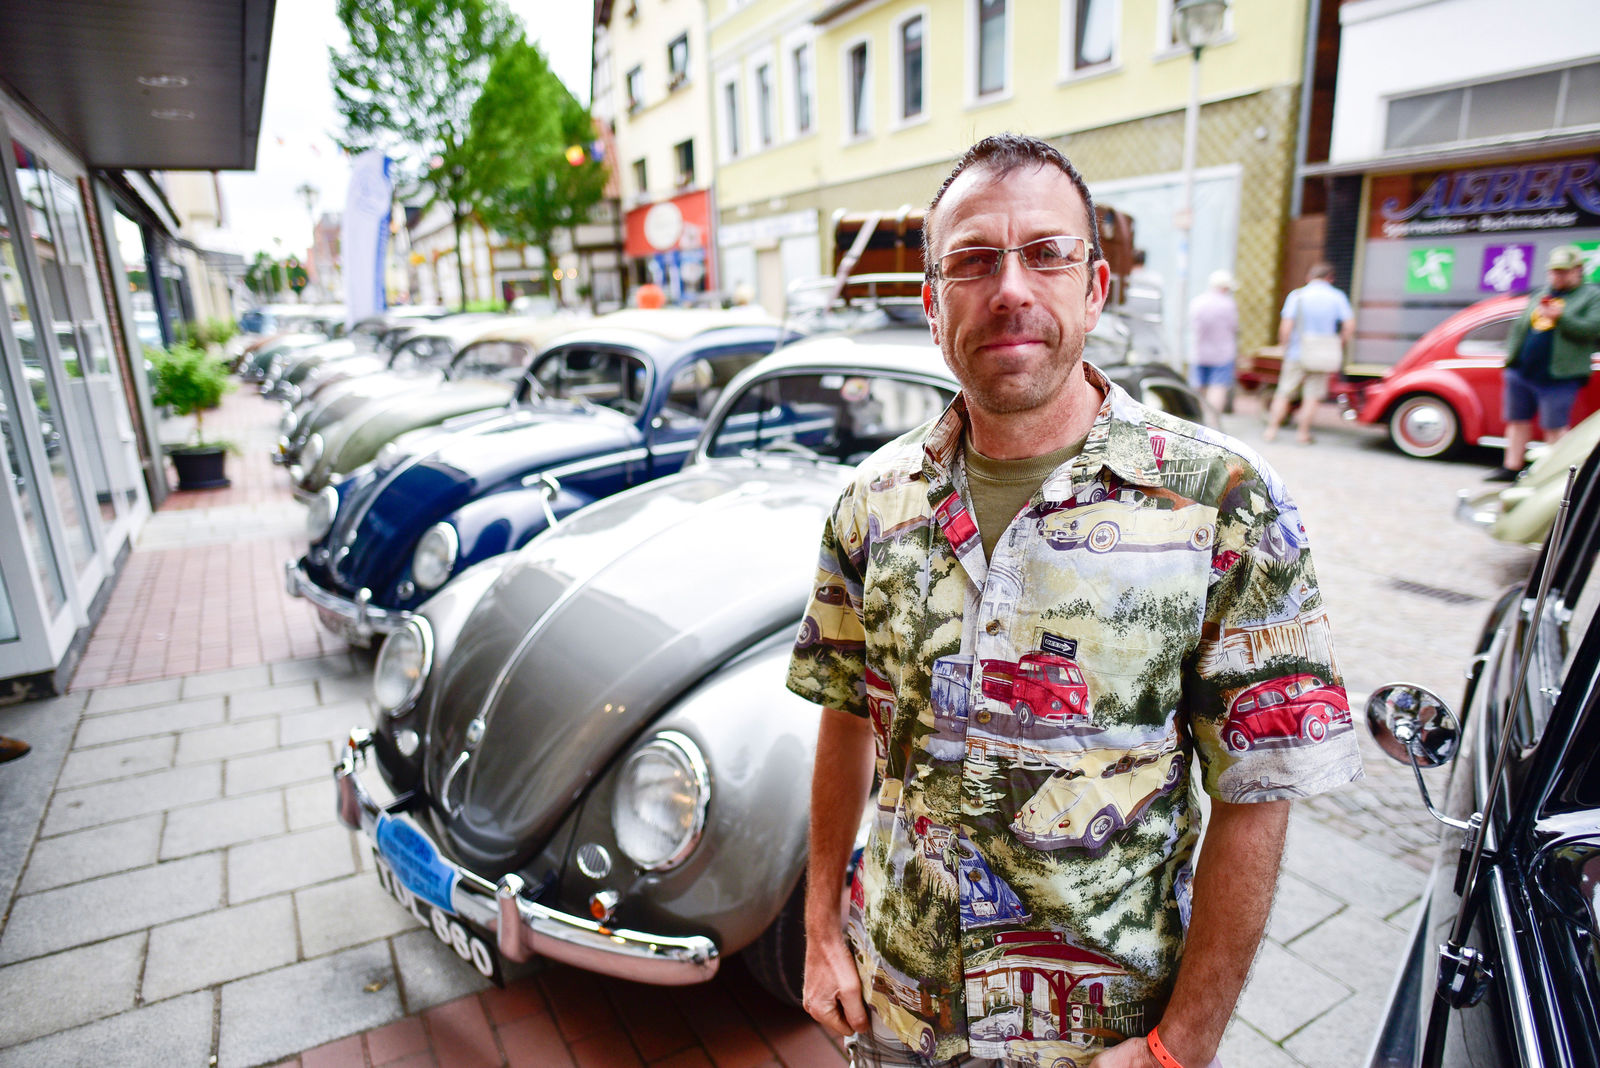 7. Internationales Volkswagen Veteranentreffen in Hessisch Oldendorf